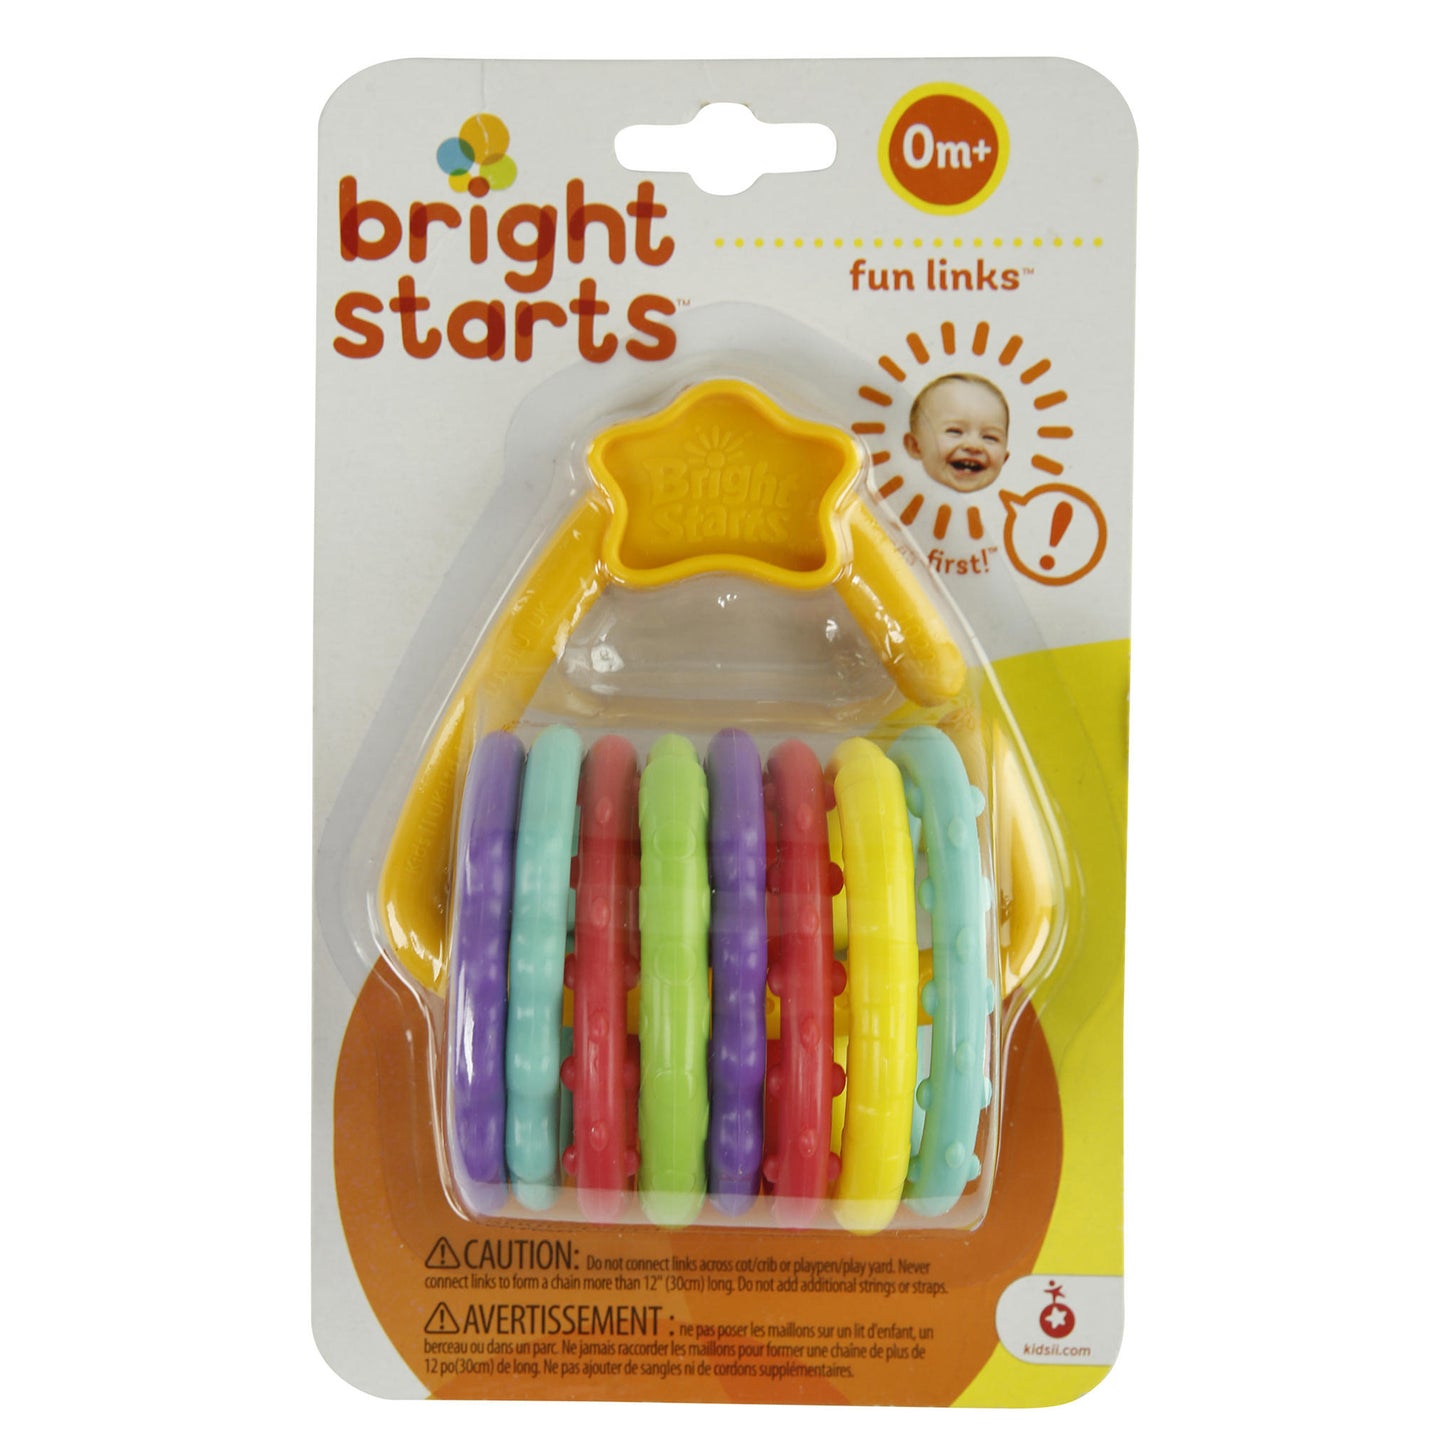 Baby's Bright Stars Fun Links sensory toy